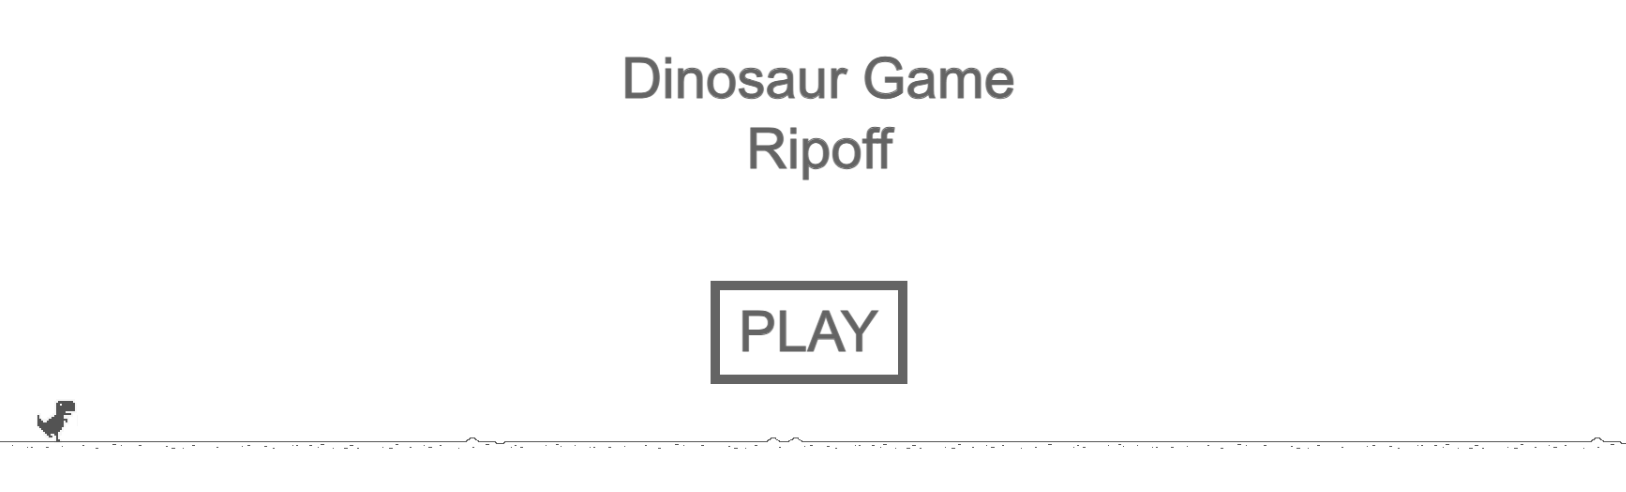 Dinosaur Game Ripoff